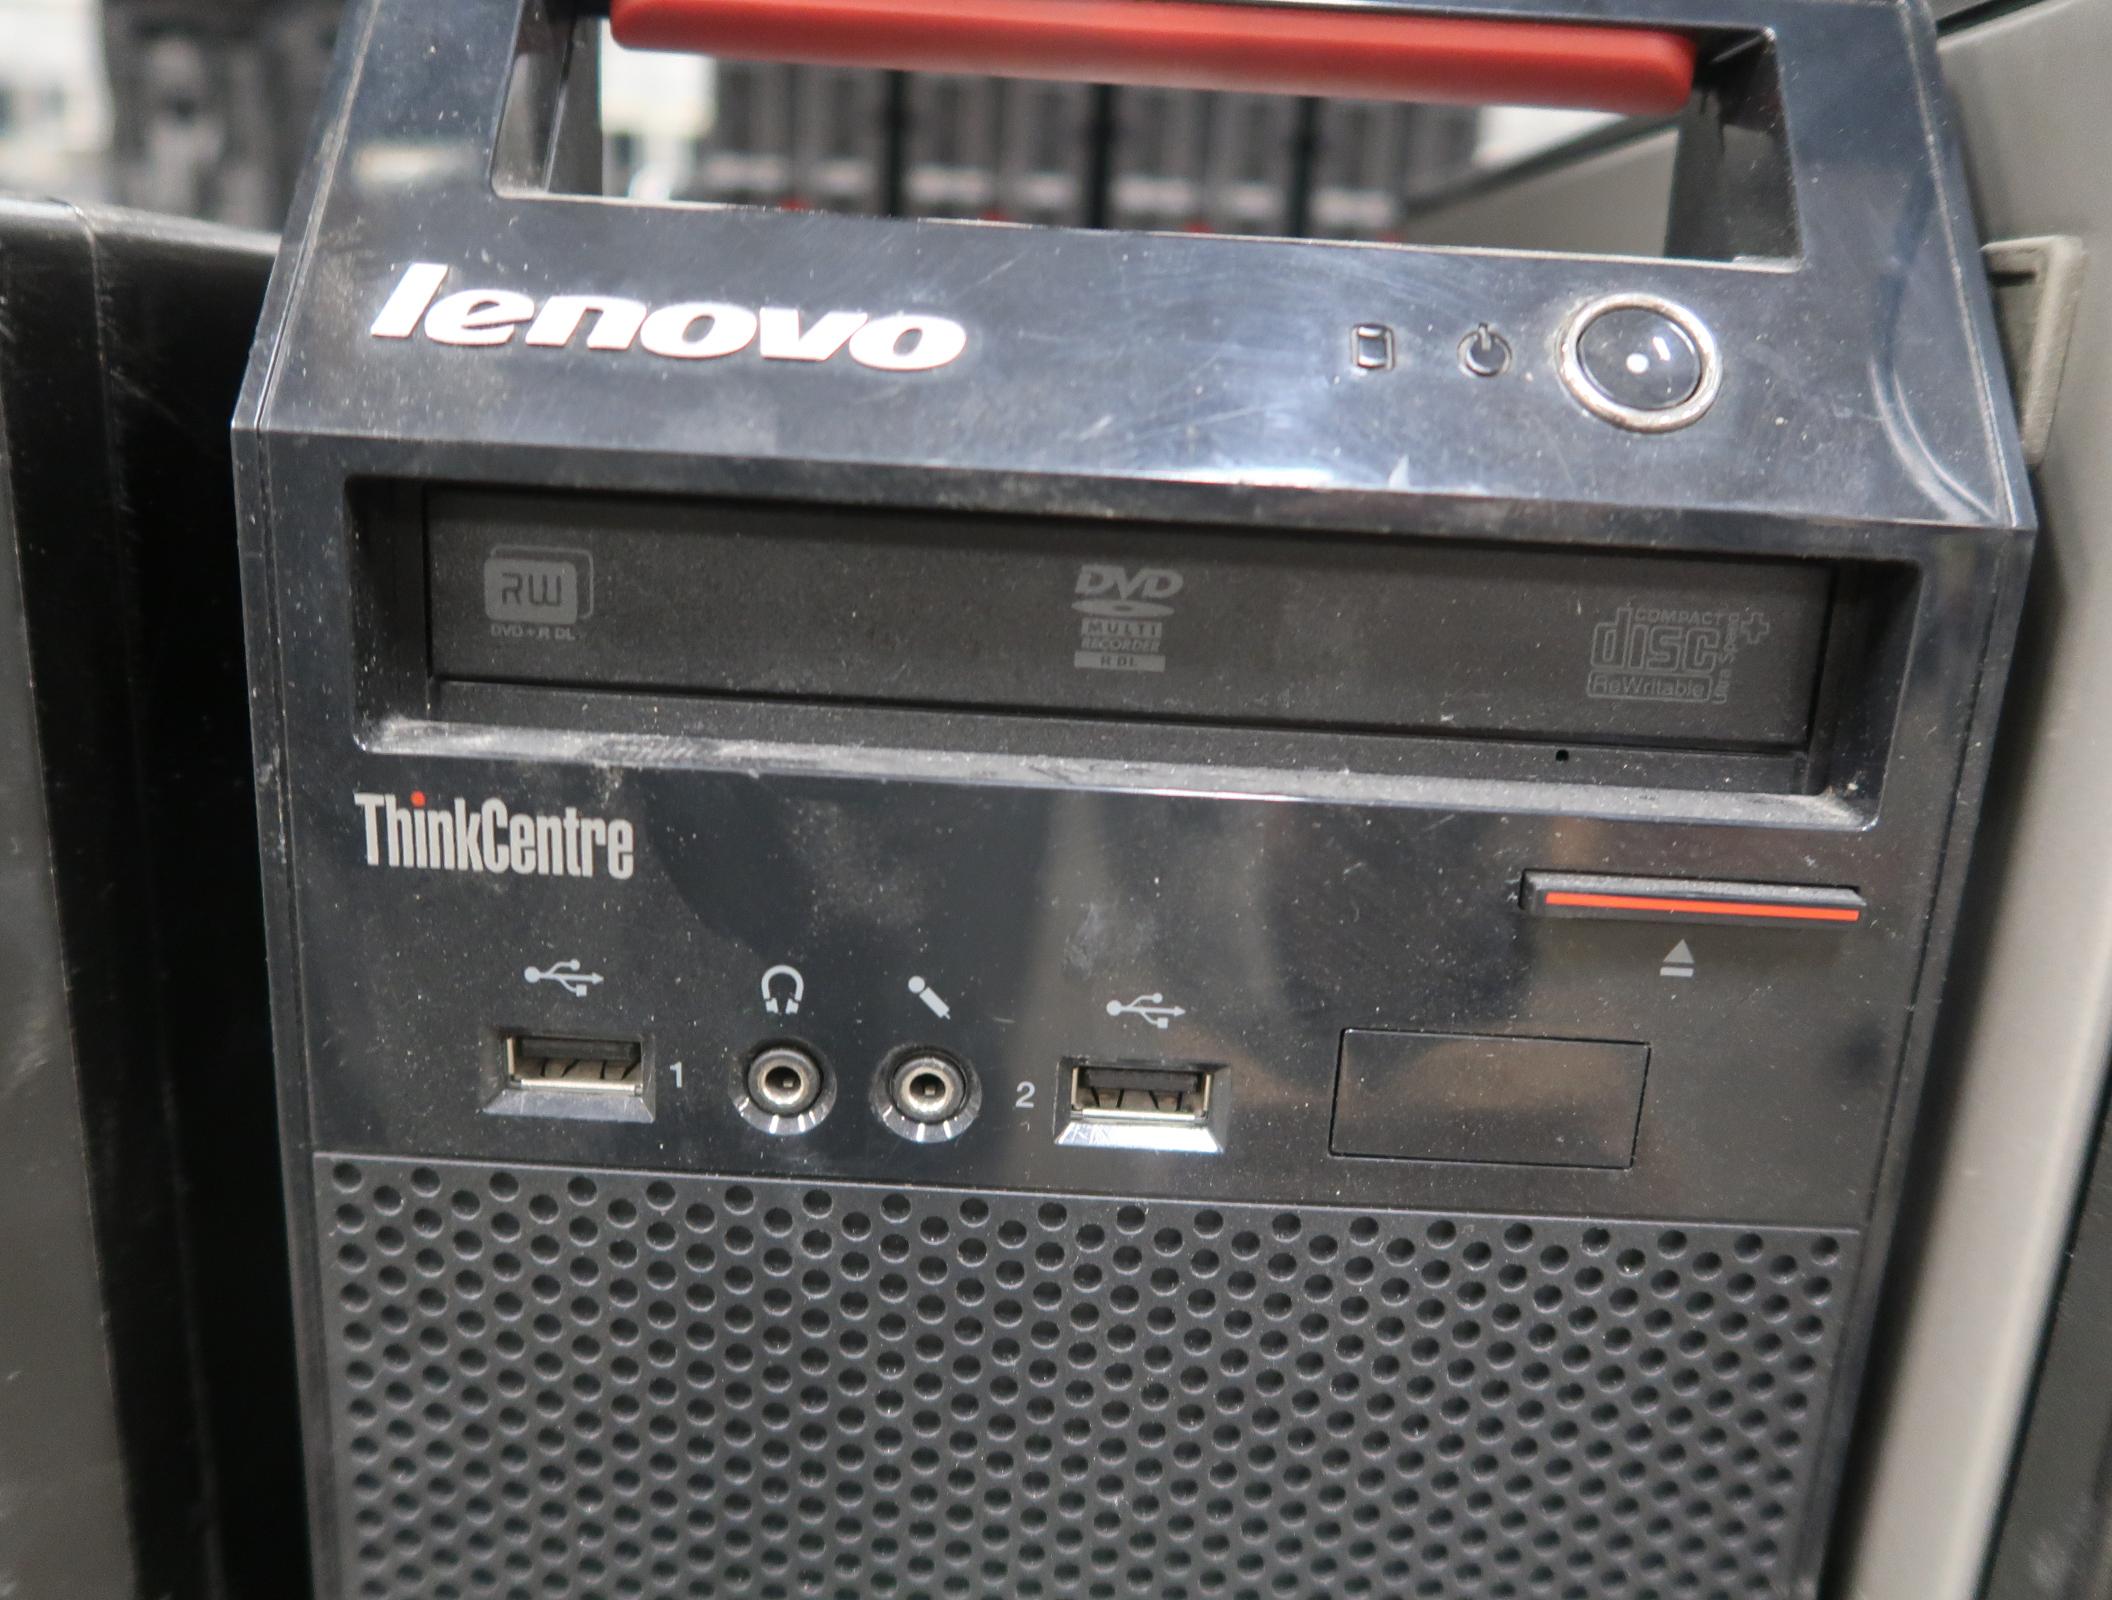 Lenovo ThinkCentre E73 computer